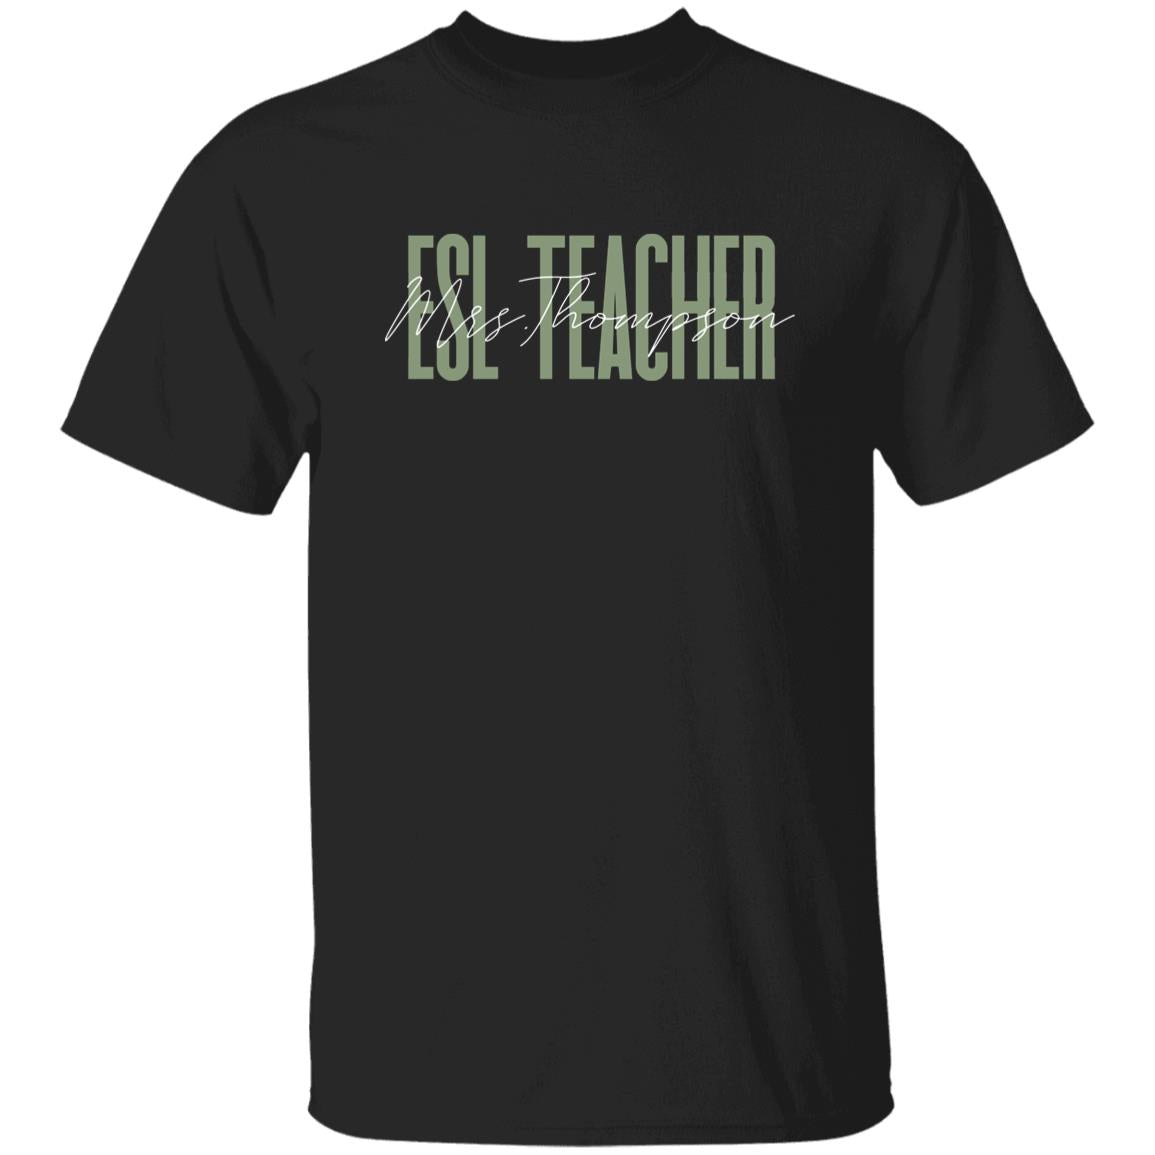 ESL teacher T-Shirt gift English as Second Language Teacher Customized Unisex tee Black Navy Dark Heather-Family-Gift-Planet